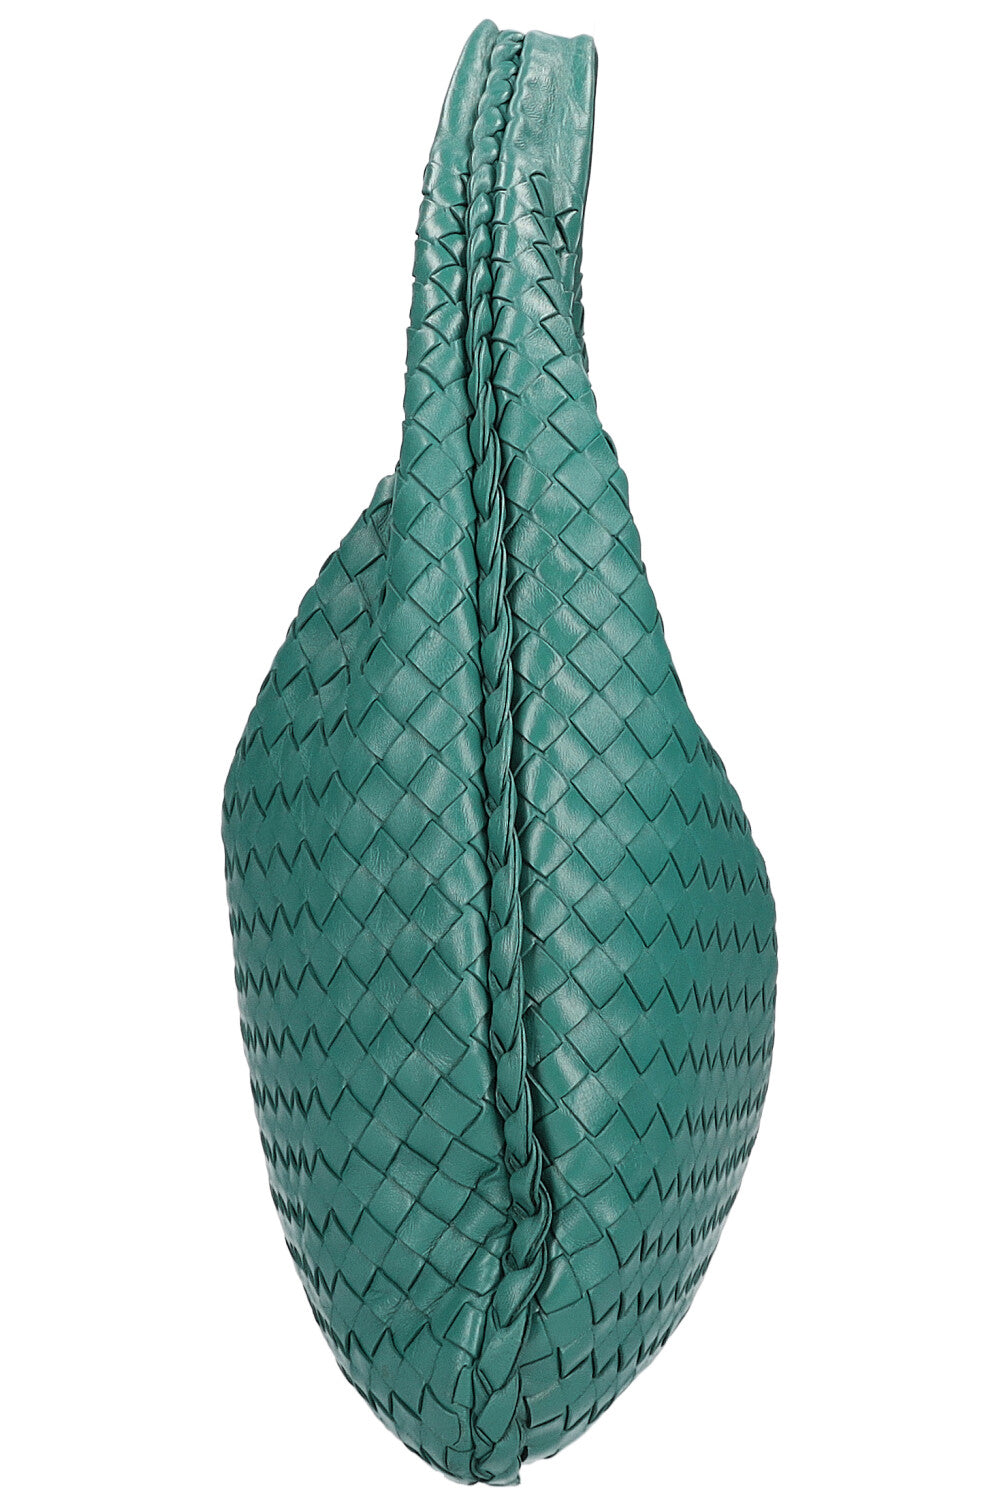 BOTTEGA VENETA Hobo Bag Intrecciato Emerald